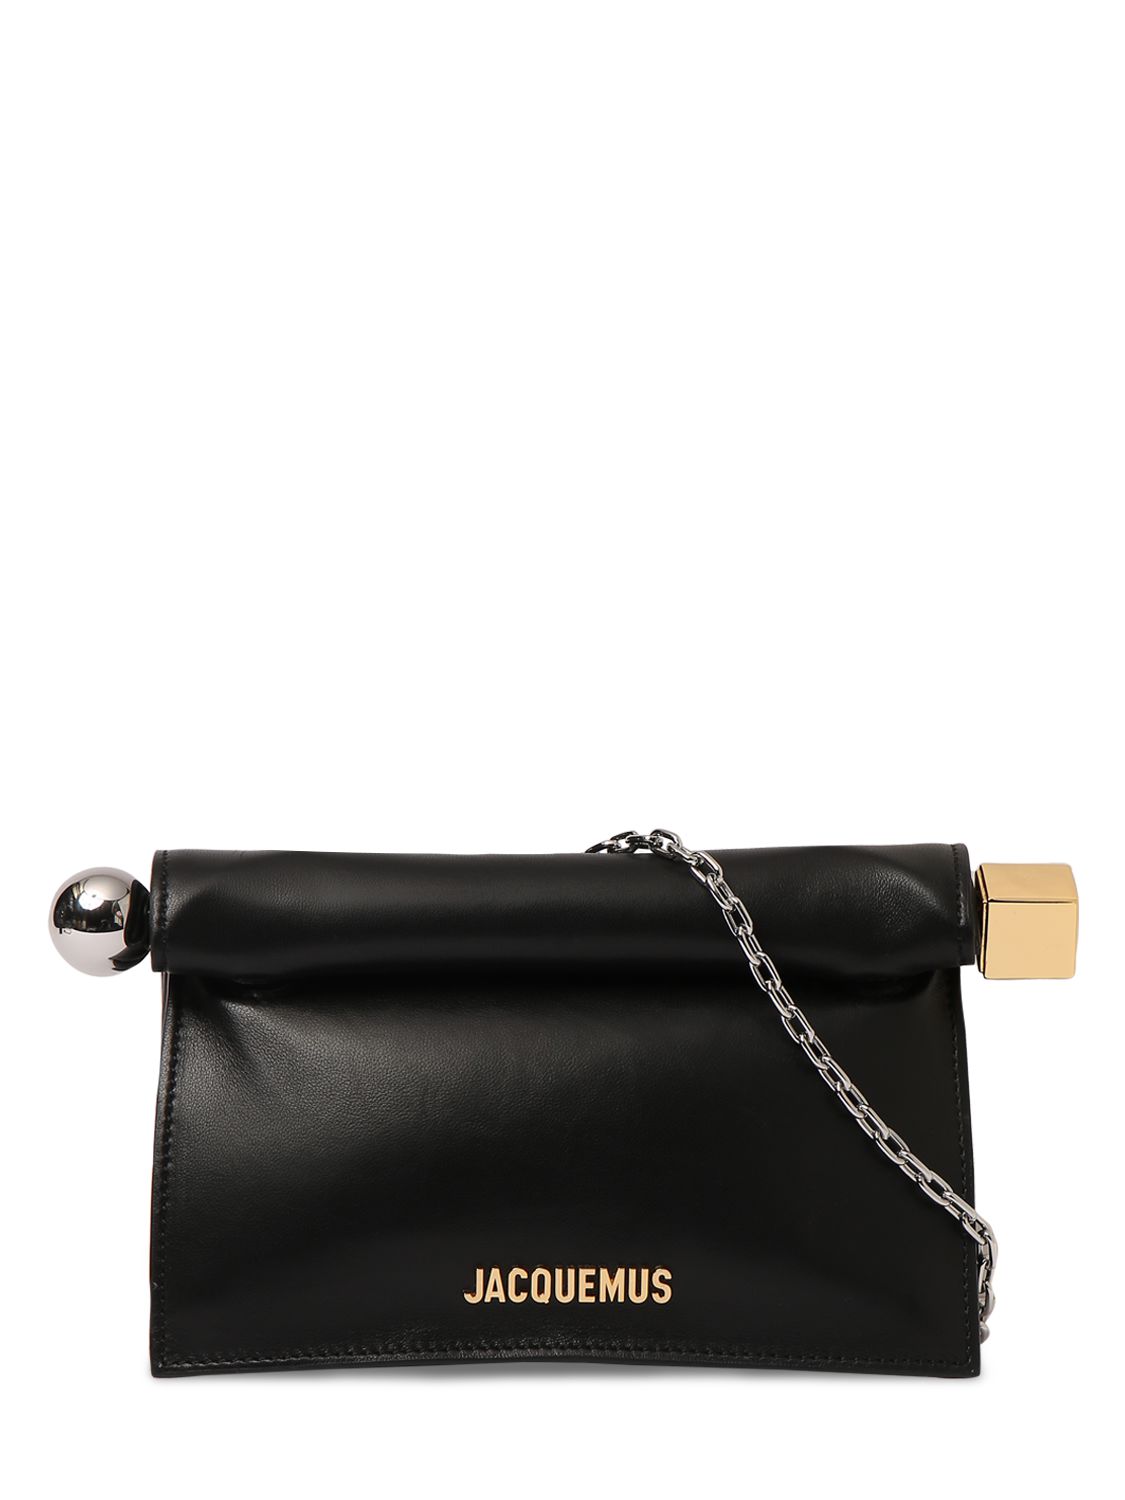 Jacquemus La Petite Pochette Rond Leather Clutch In Black